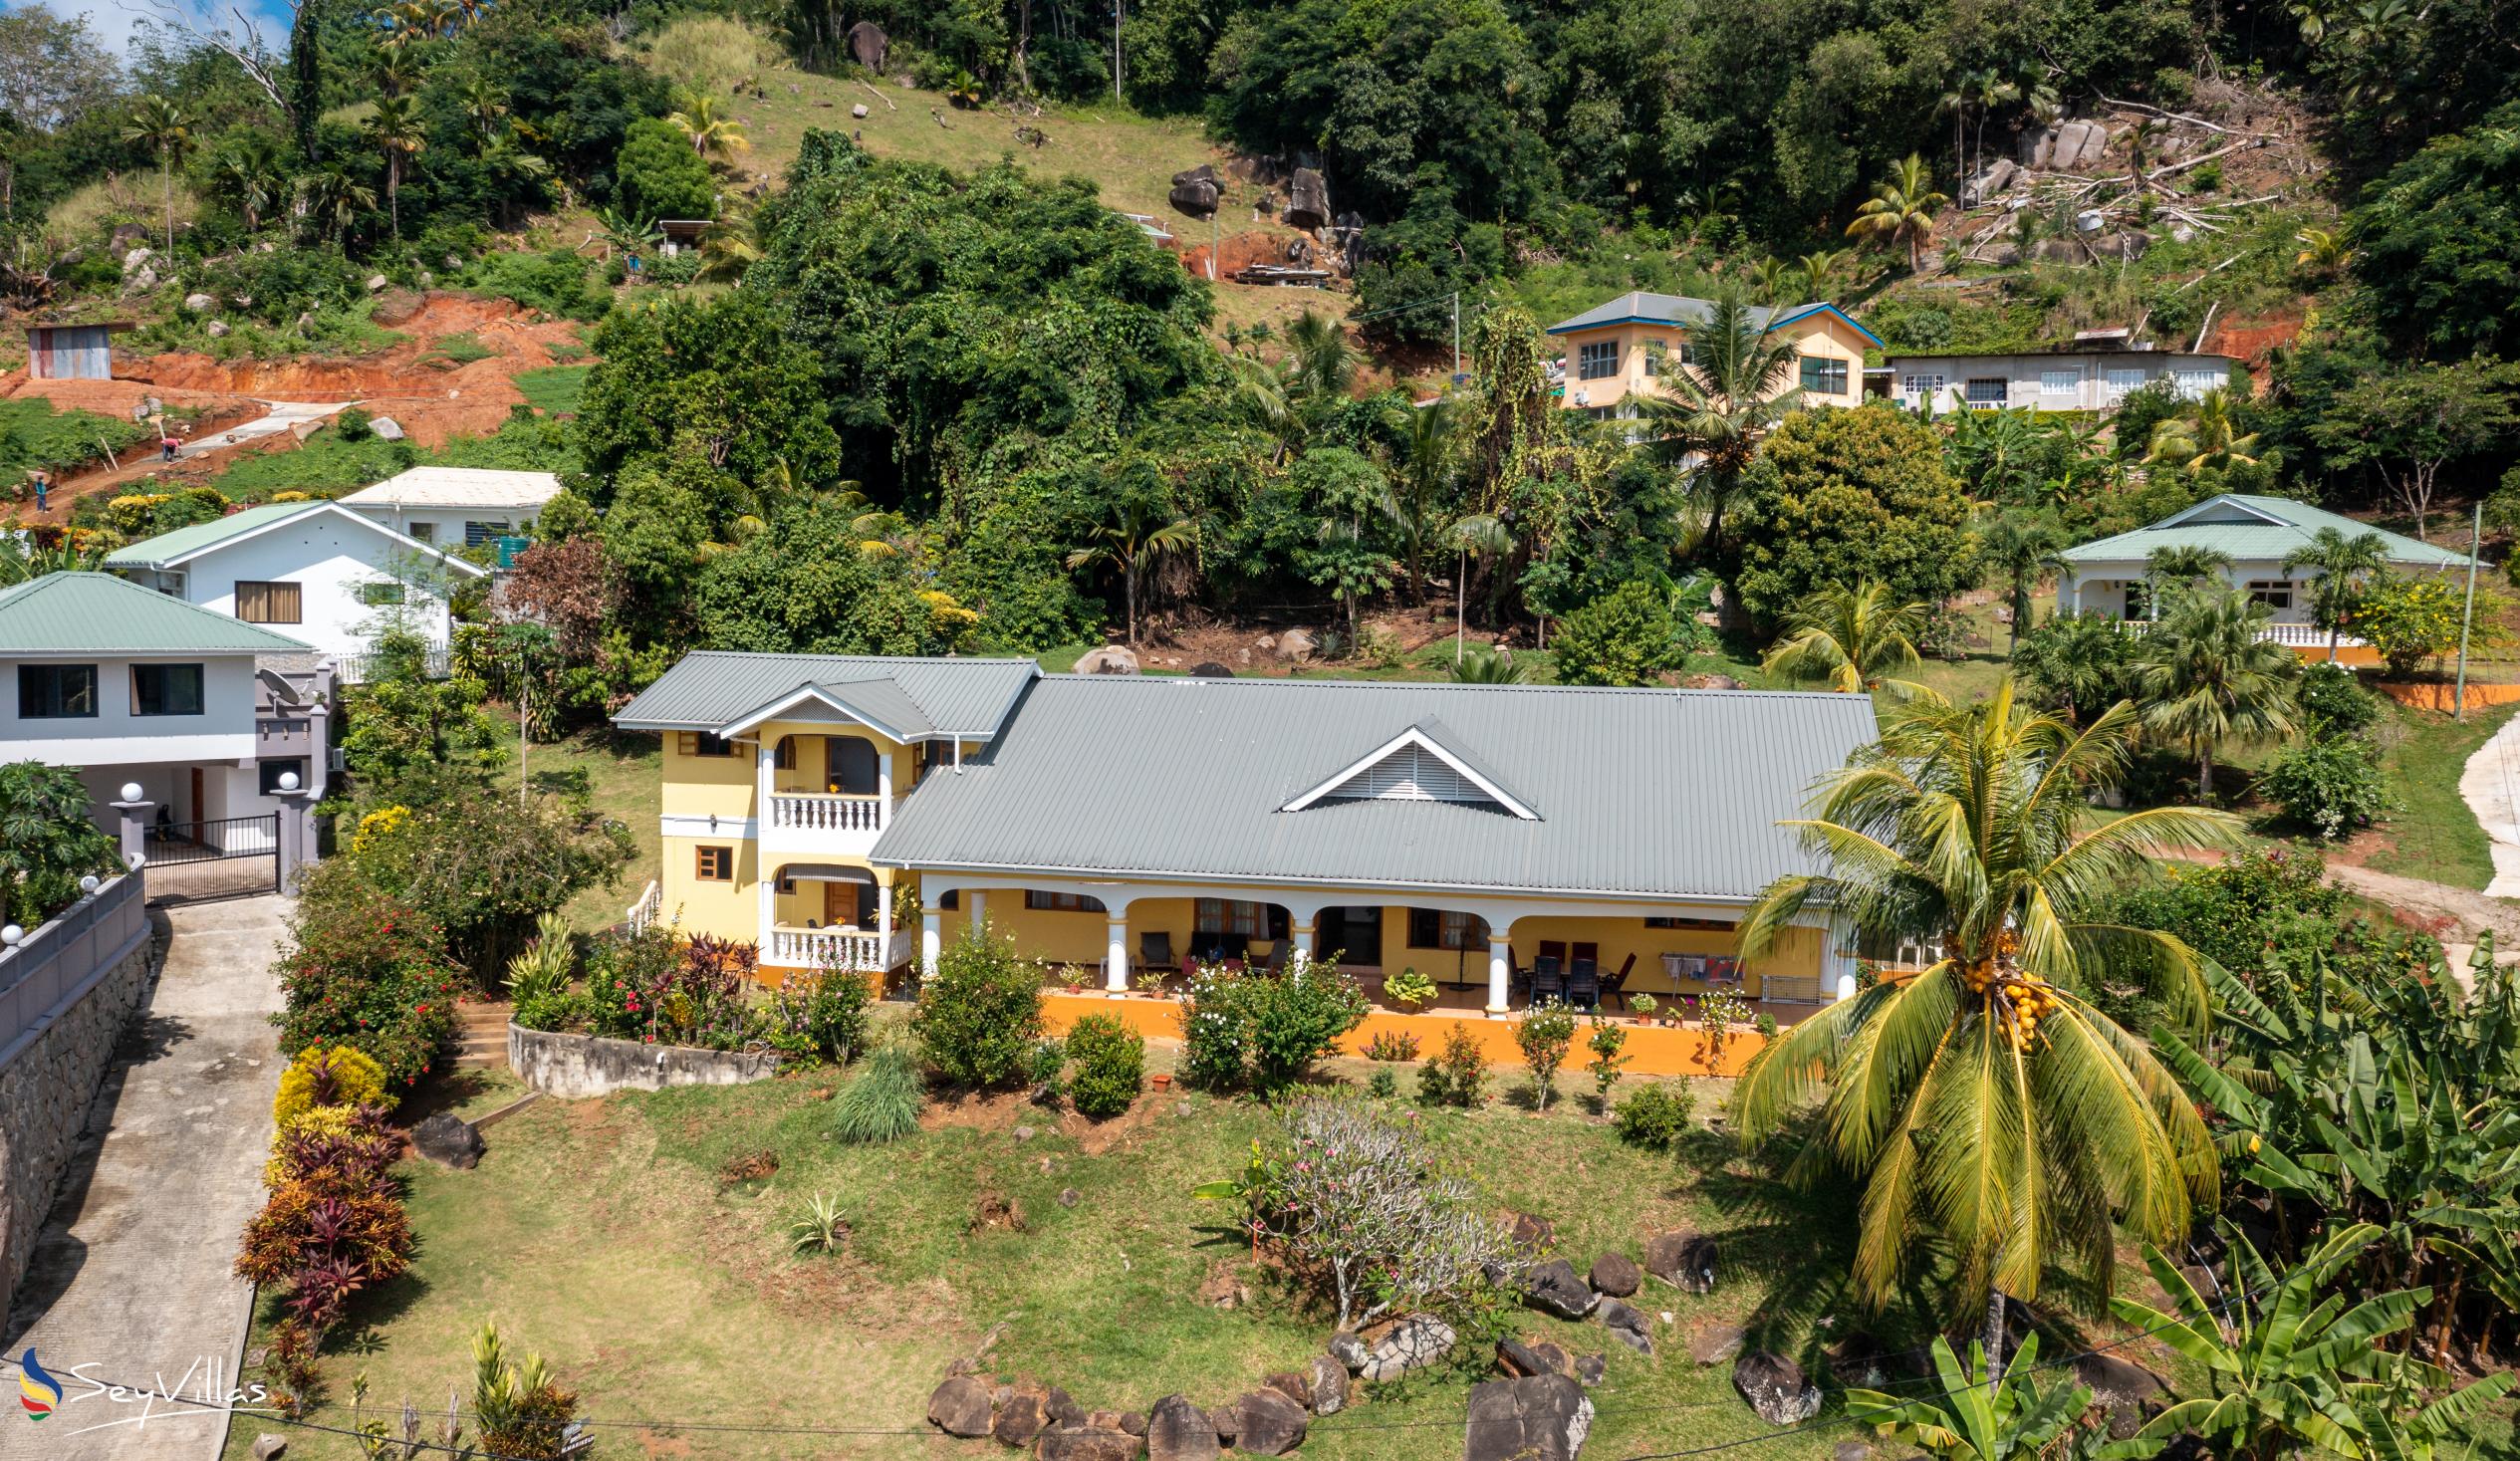 Photo 7: Maison Marikel - Outdoor area - Mahé (Seychelles)